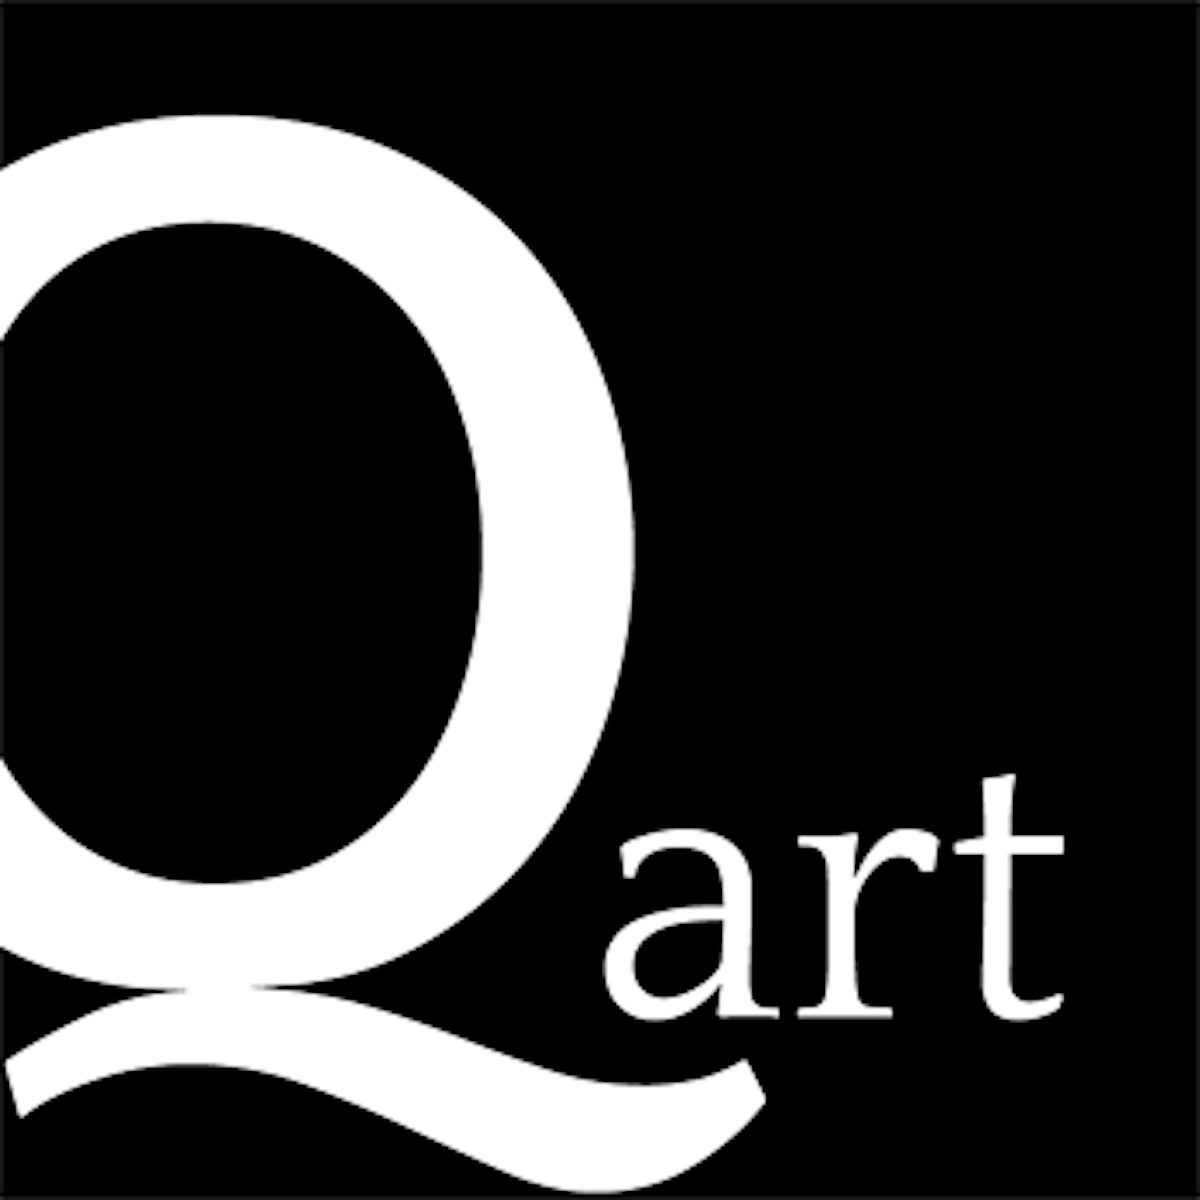 qart-opensea-logo.png